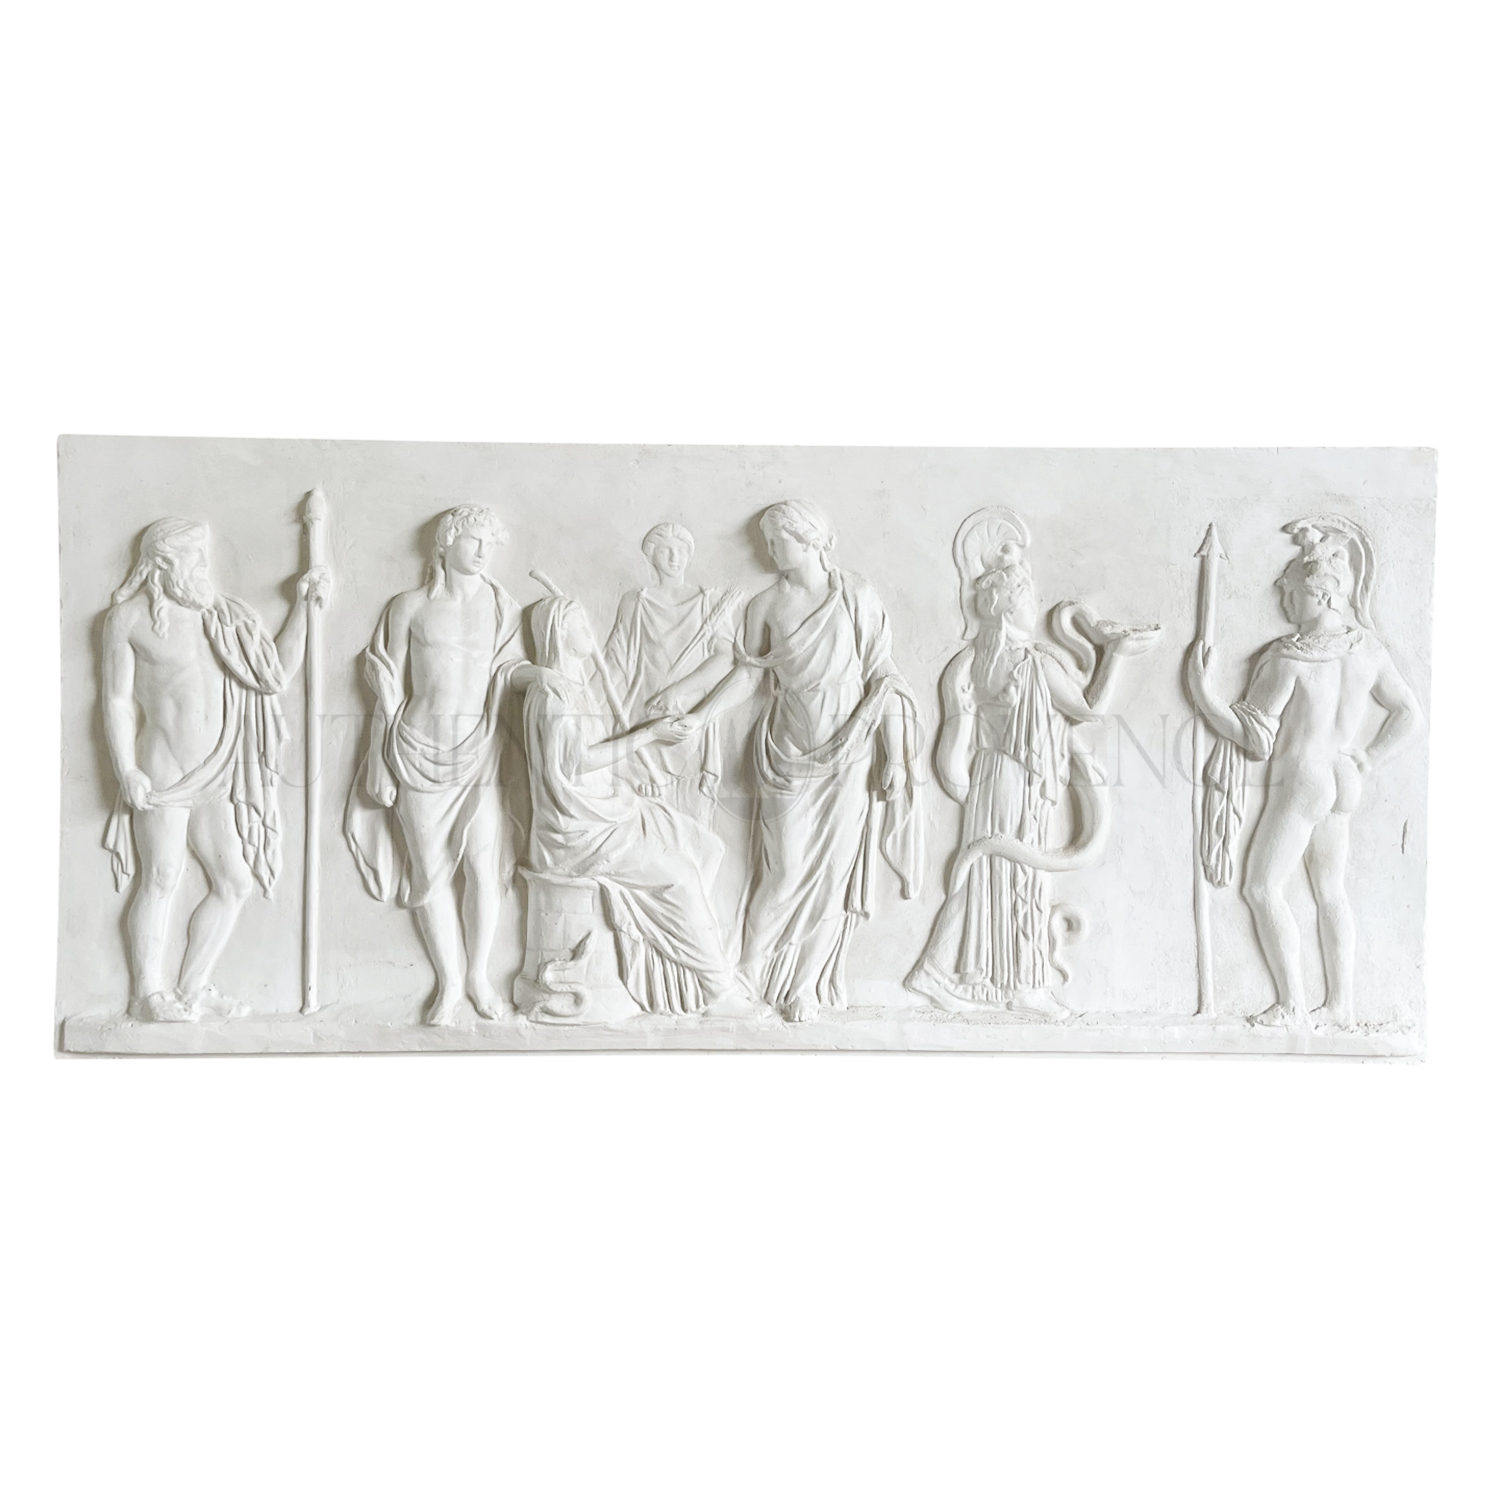 Wall Relief of the Greek Mythology & the Greek Gods Hermes, Dionysus